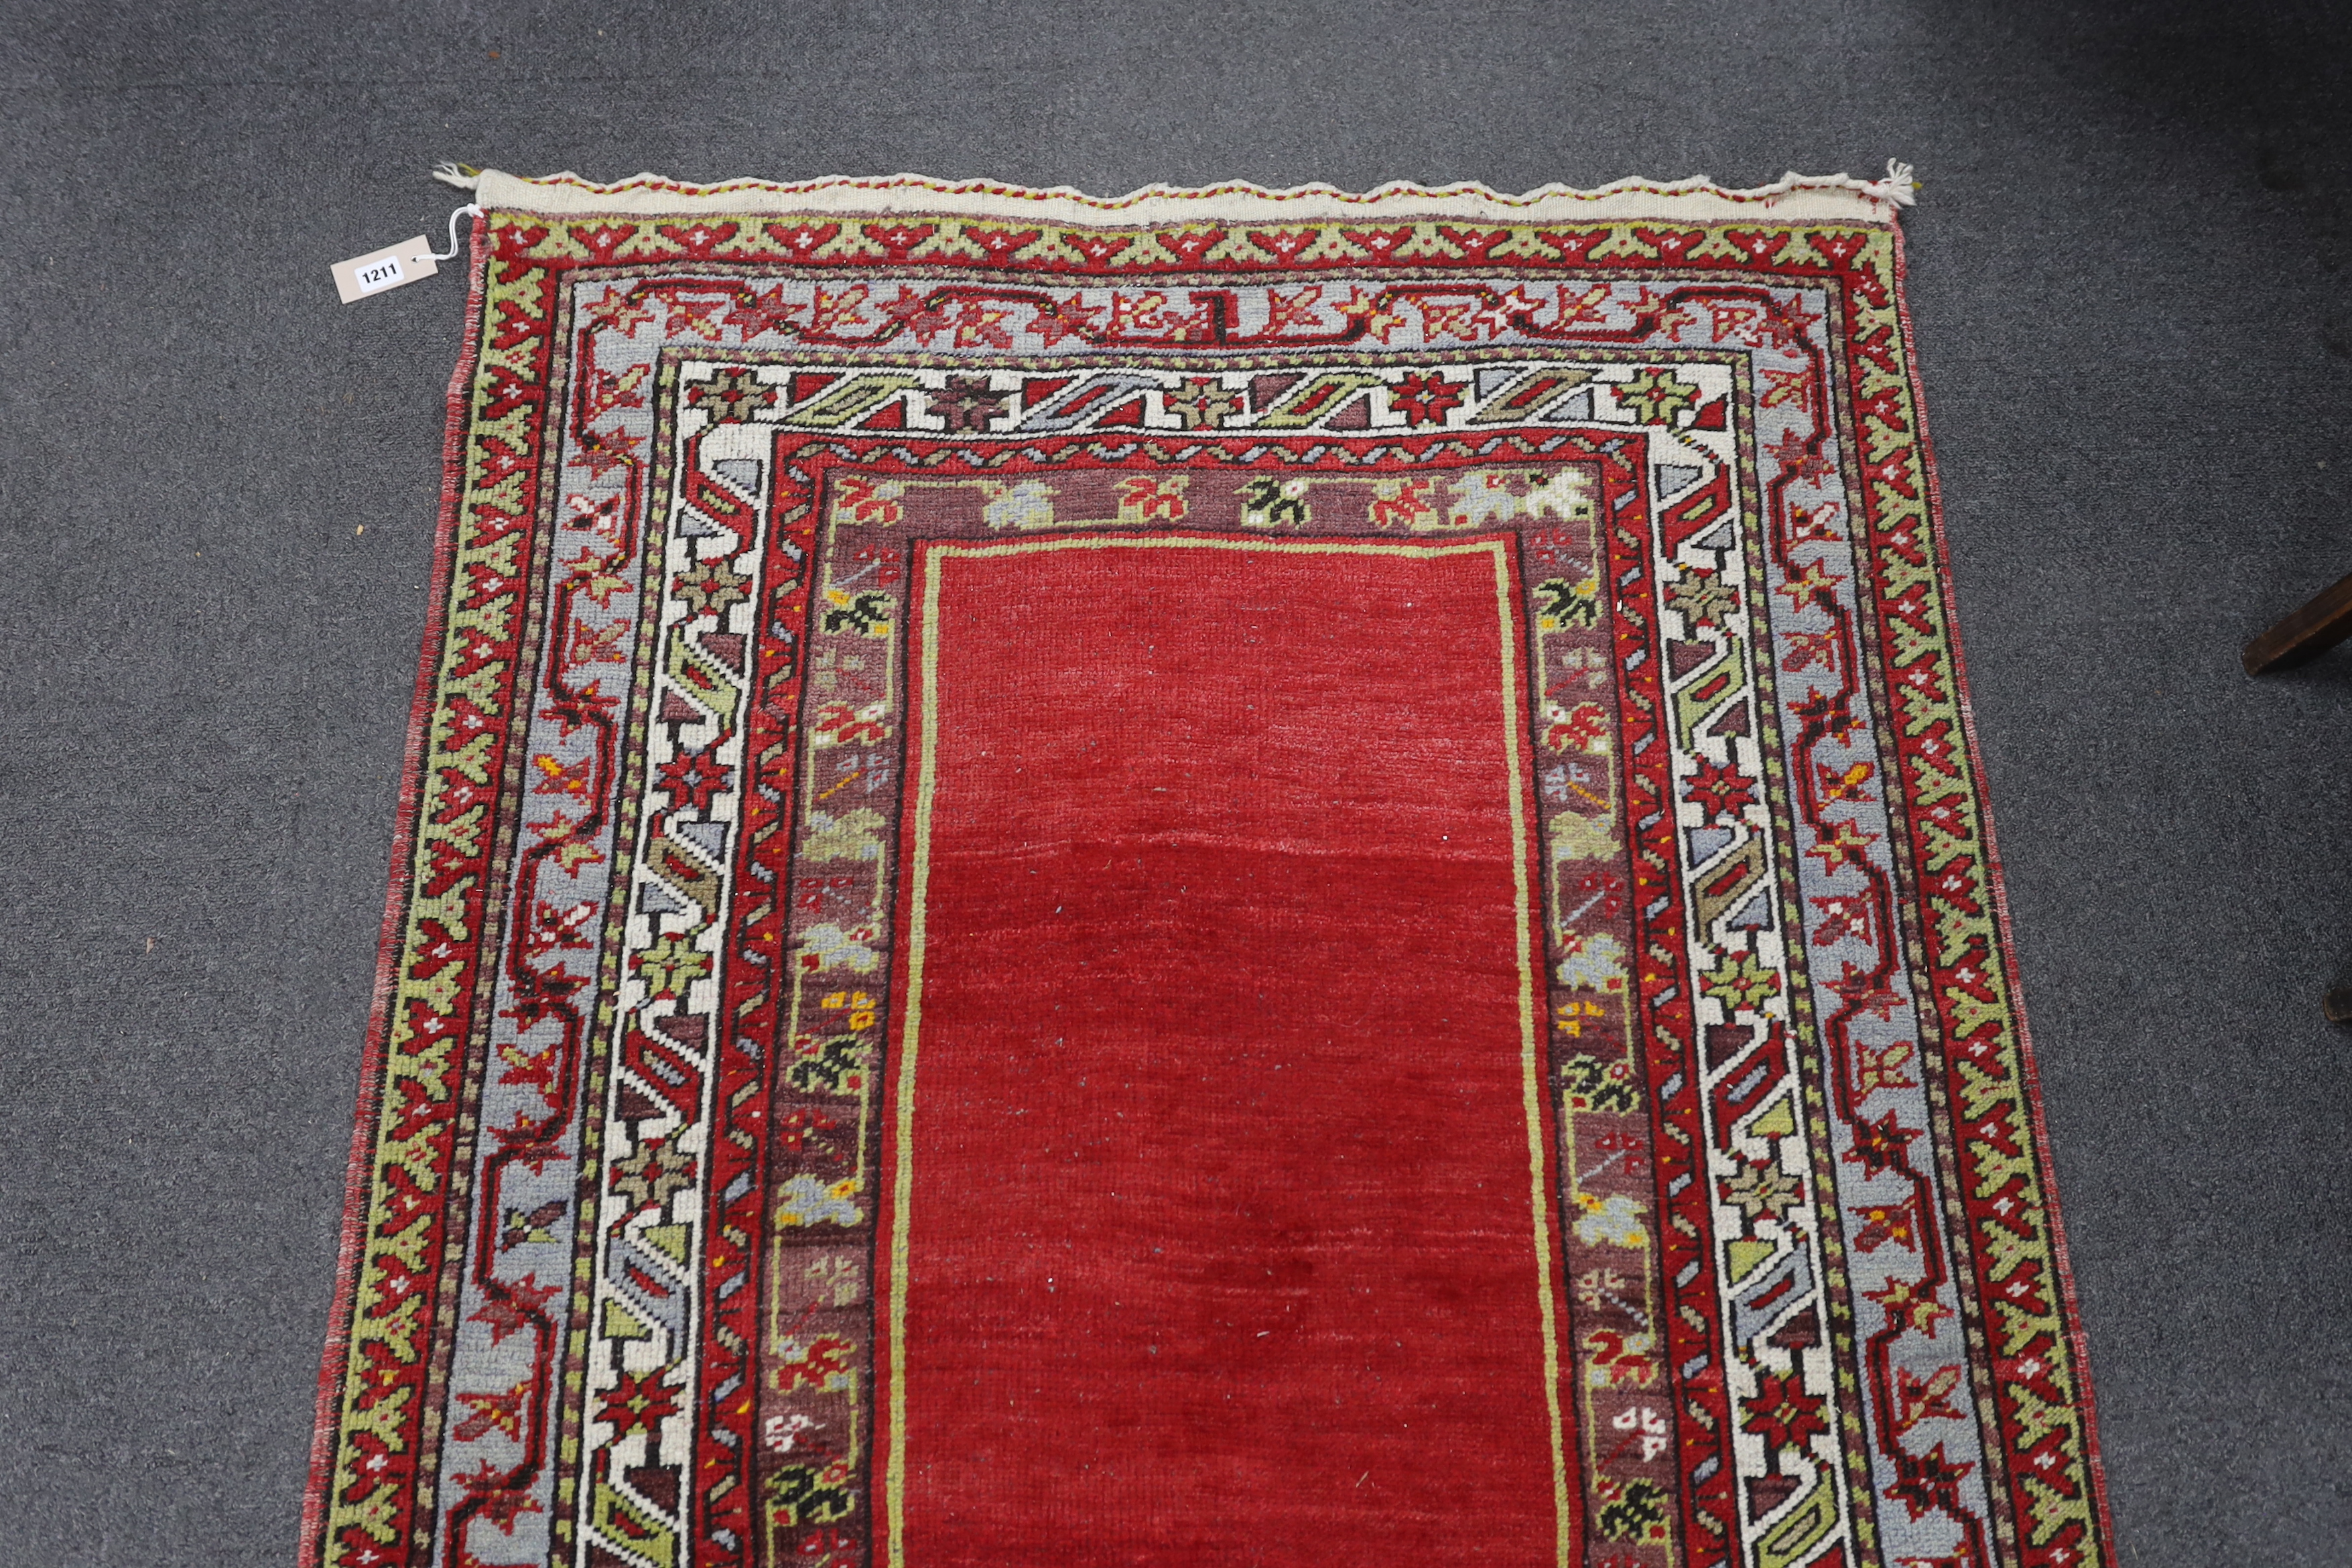 A Kesimuhsine Konya red ground prayer rug, 194 x 104cm